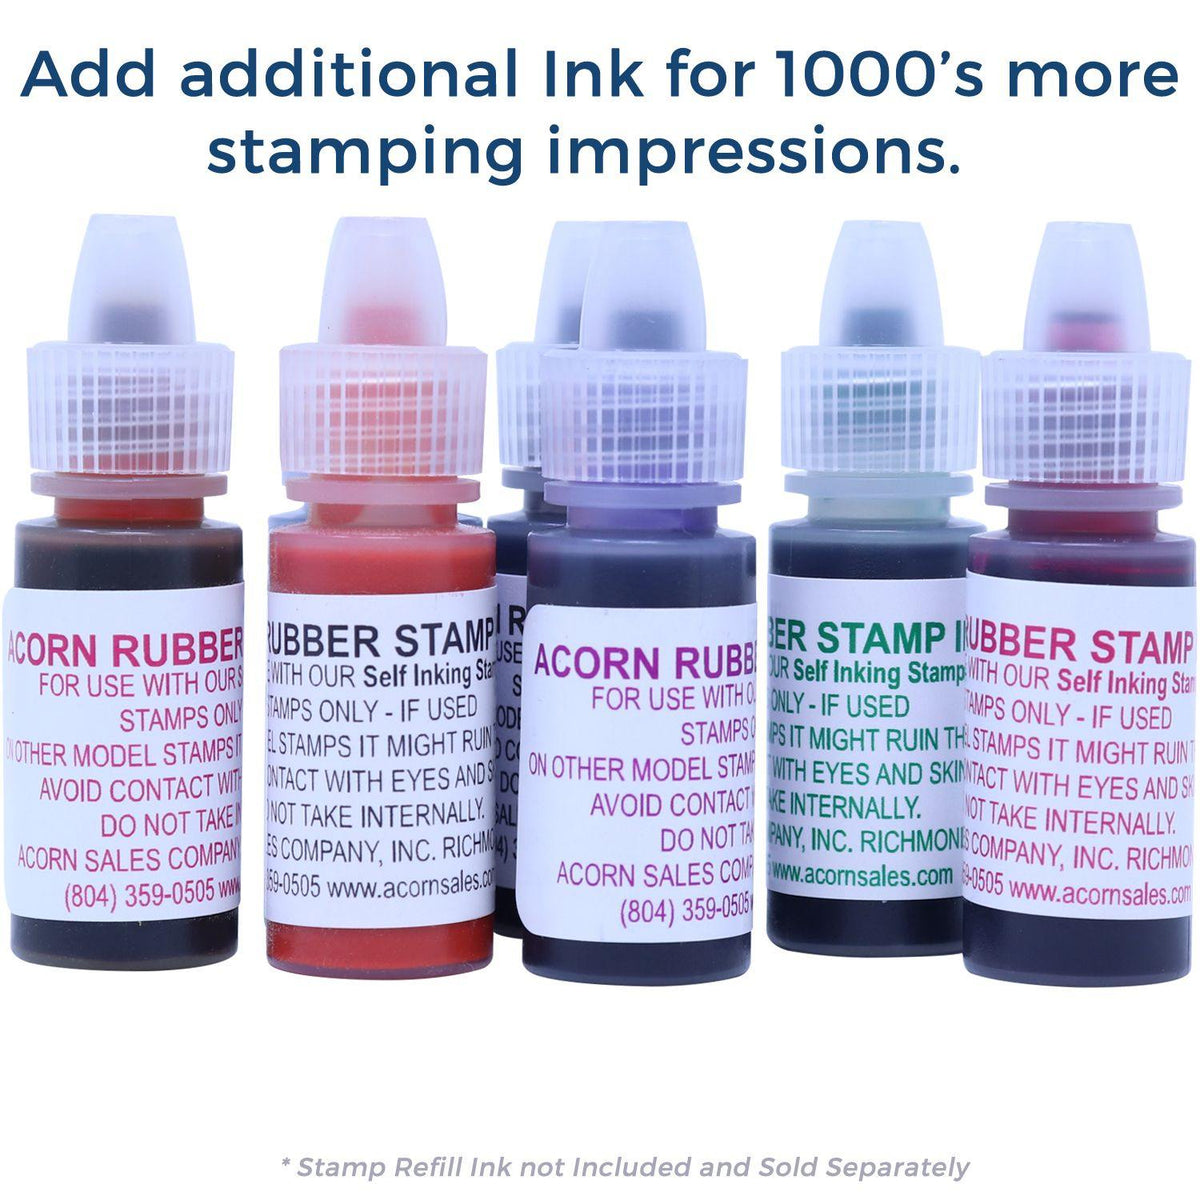 Slim Pre Inked Allergic To Penicillin Stamp - Engineer Seal Stamps - Brand_Slim, Impression Size_Small, Stamp Type_Pre-Inked Stamp, Type of Use_Medical Office